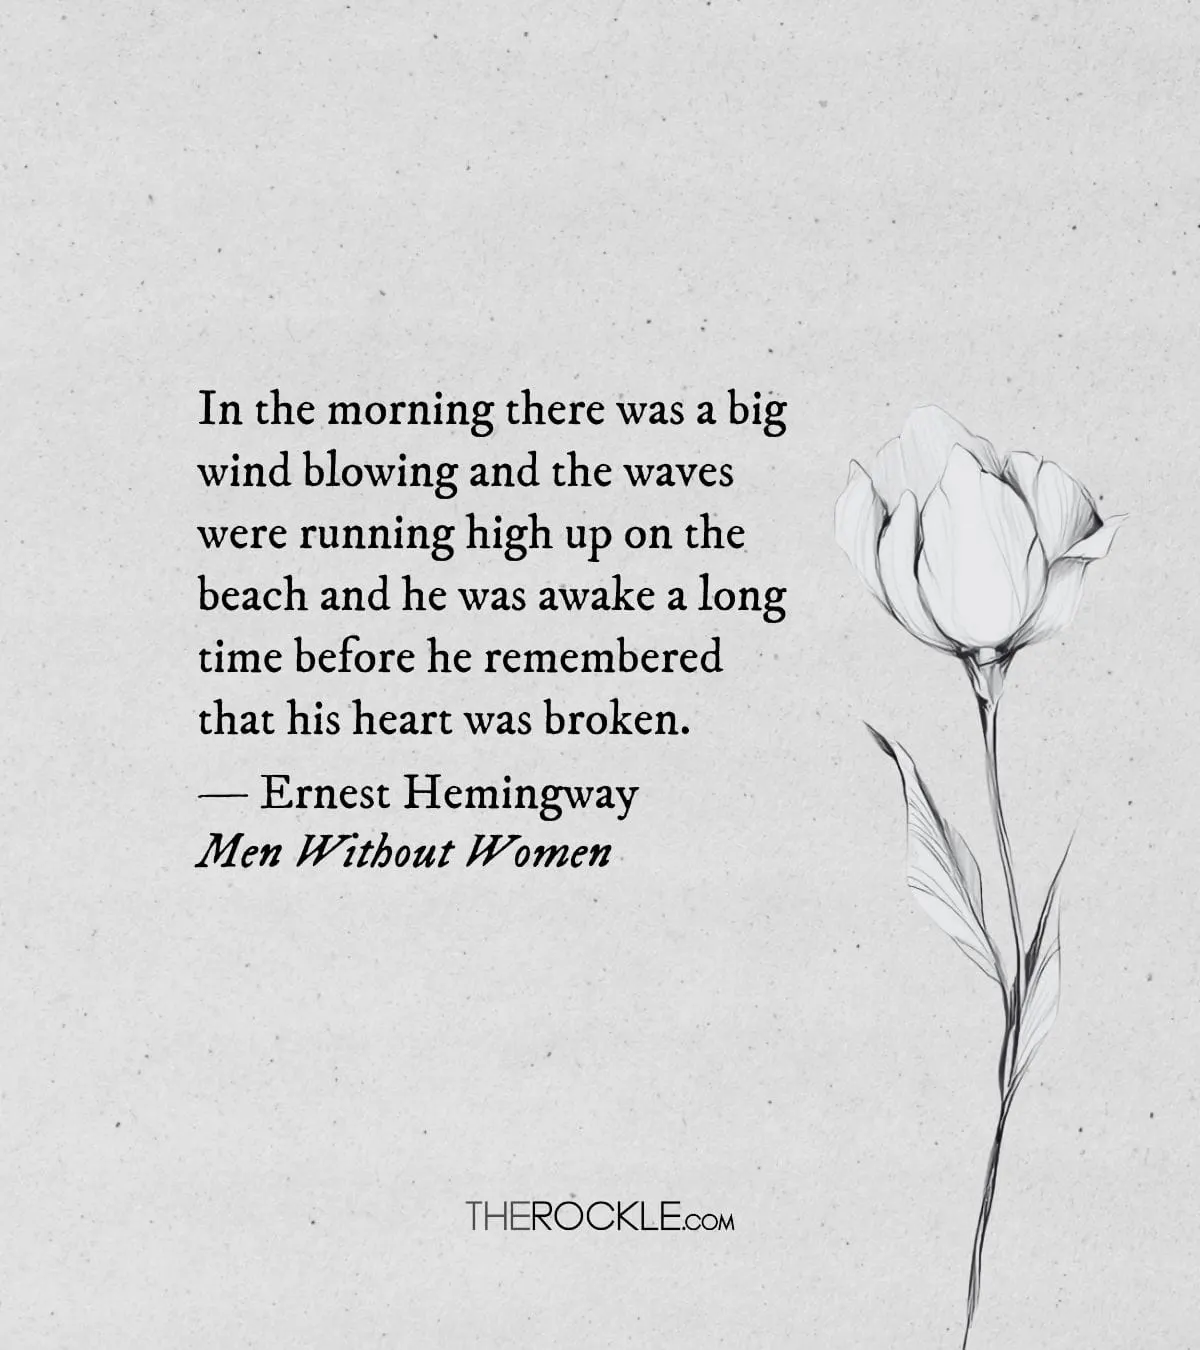 Ernest Hemingway on heartbreak